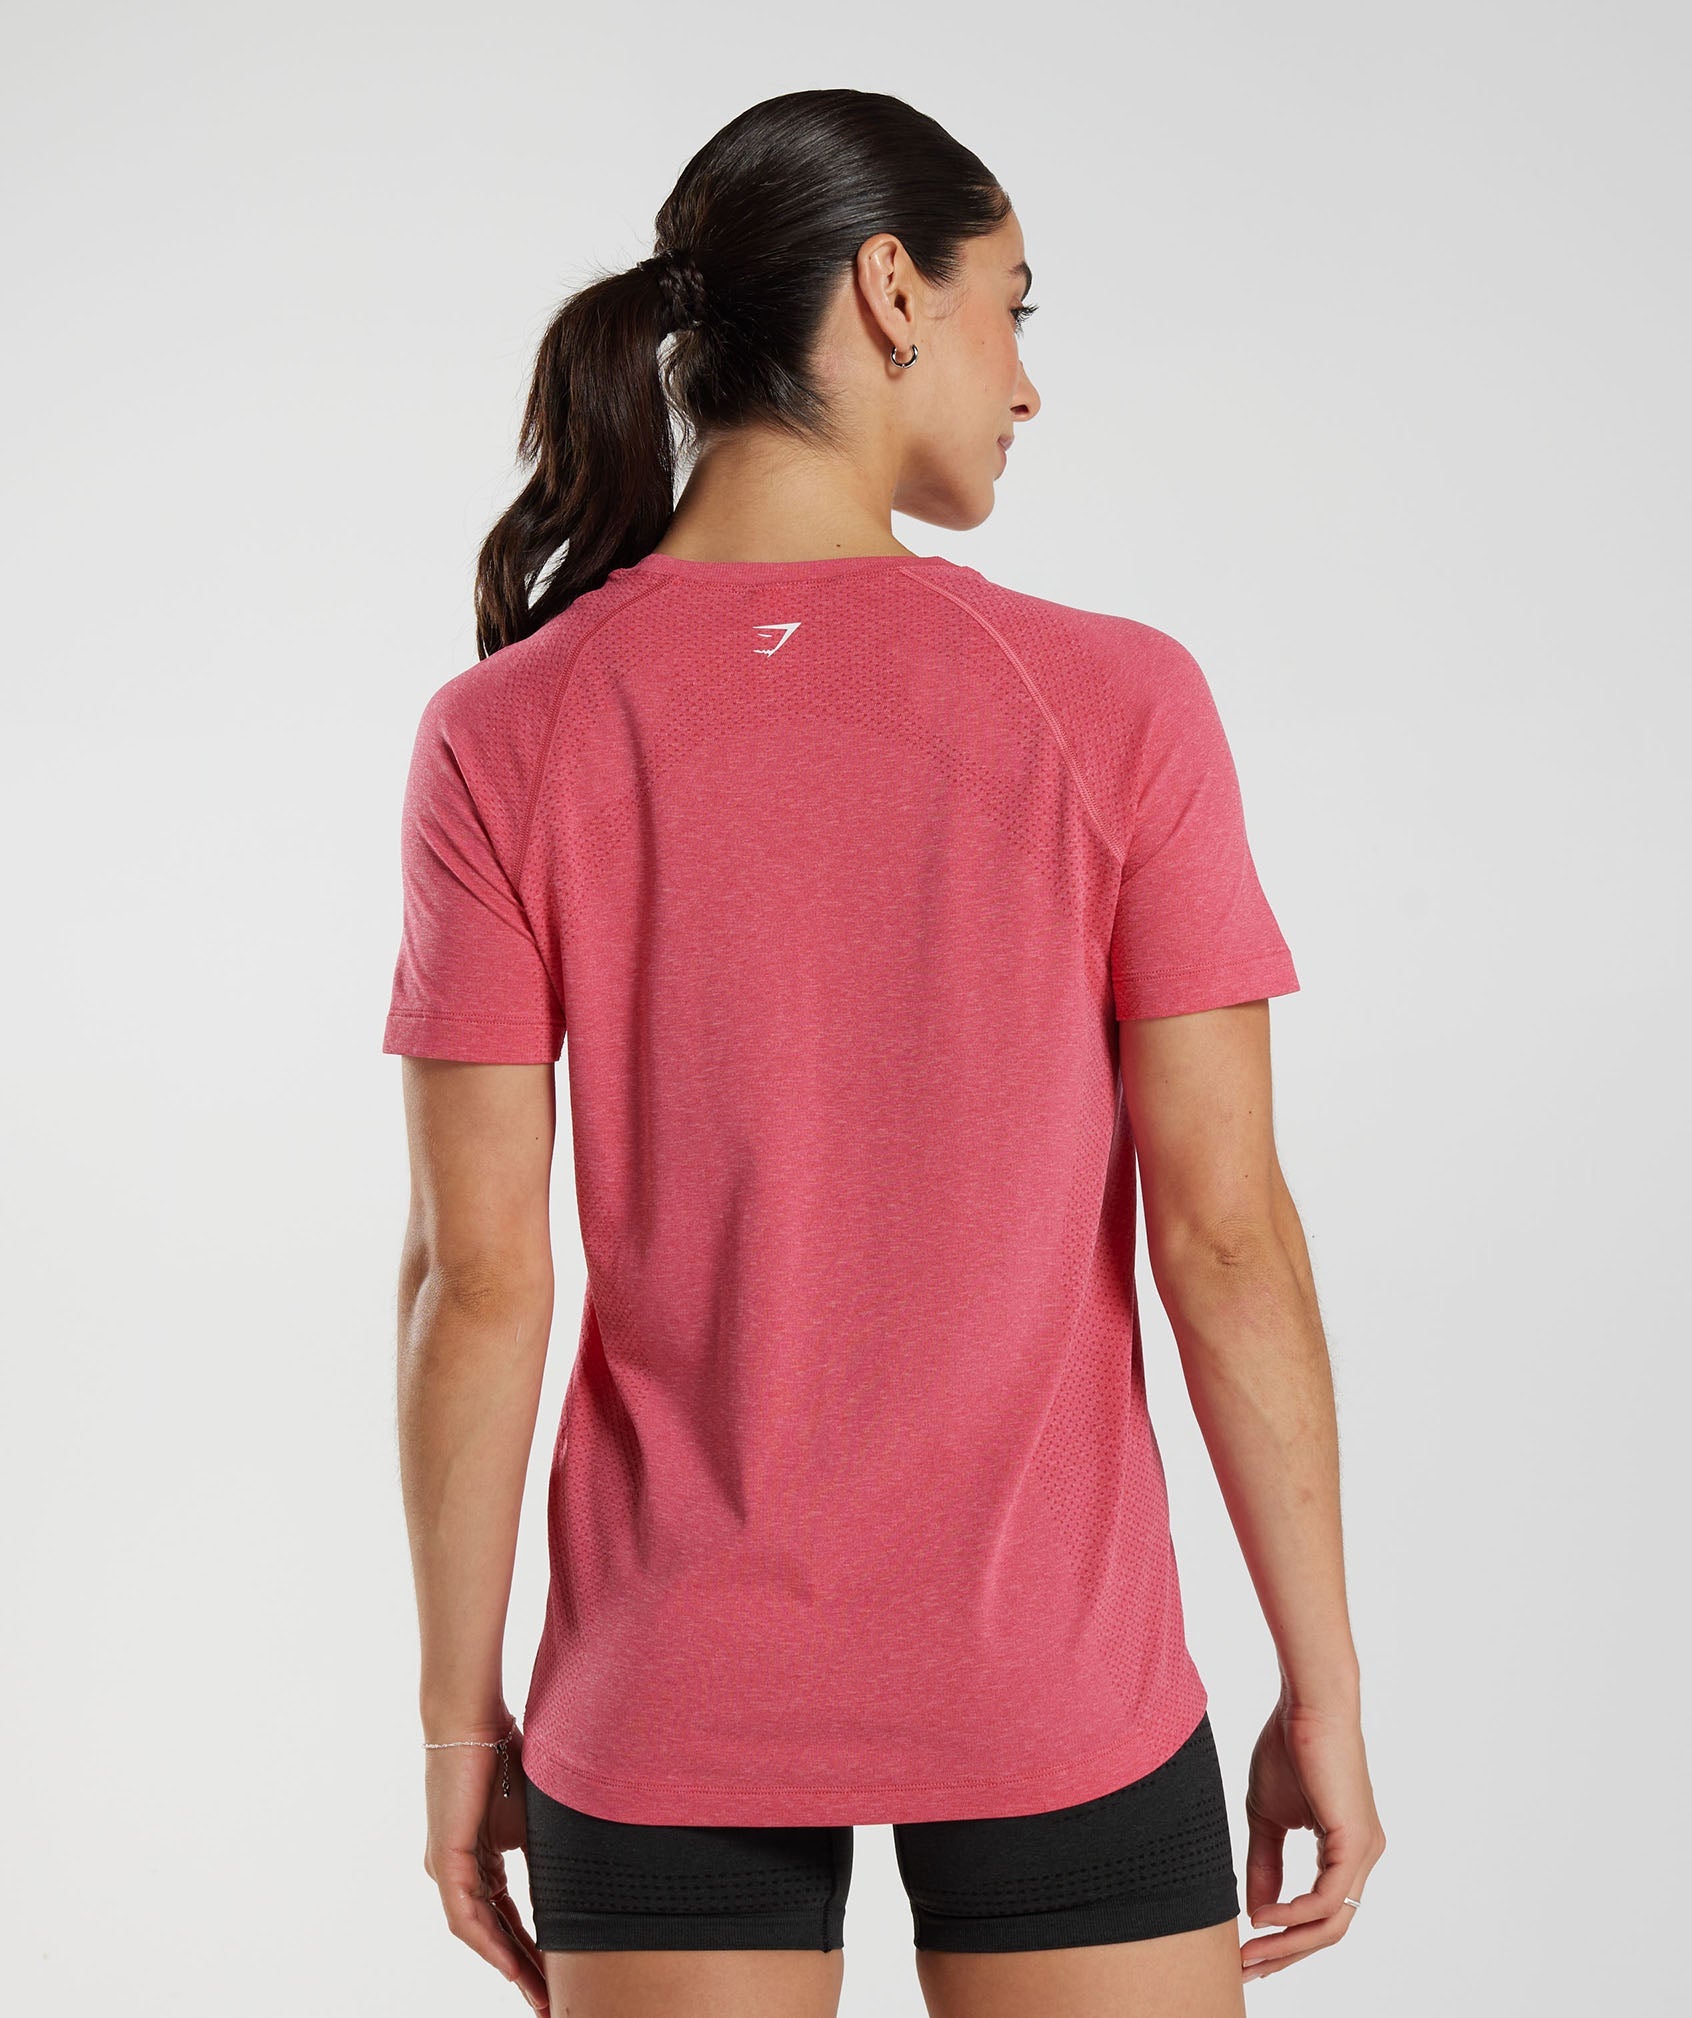 Vital Seamless 2.0 Light T-Shirt in Bright Fuchsia Marl - view 2